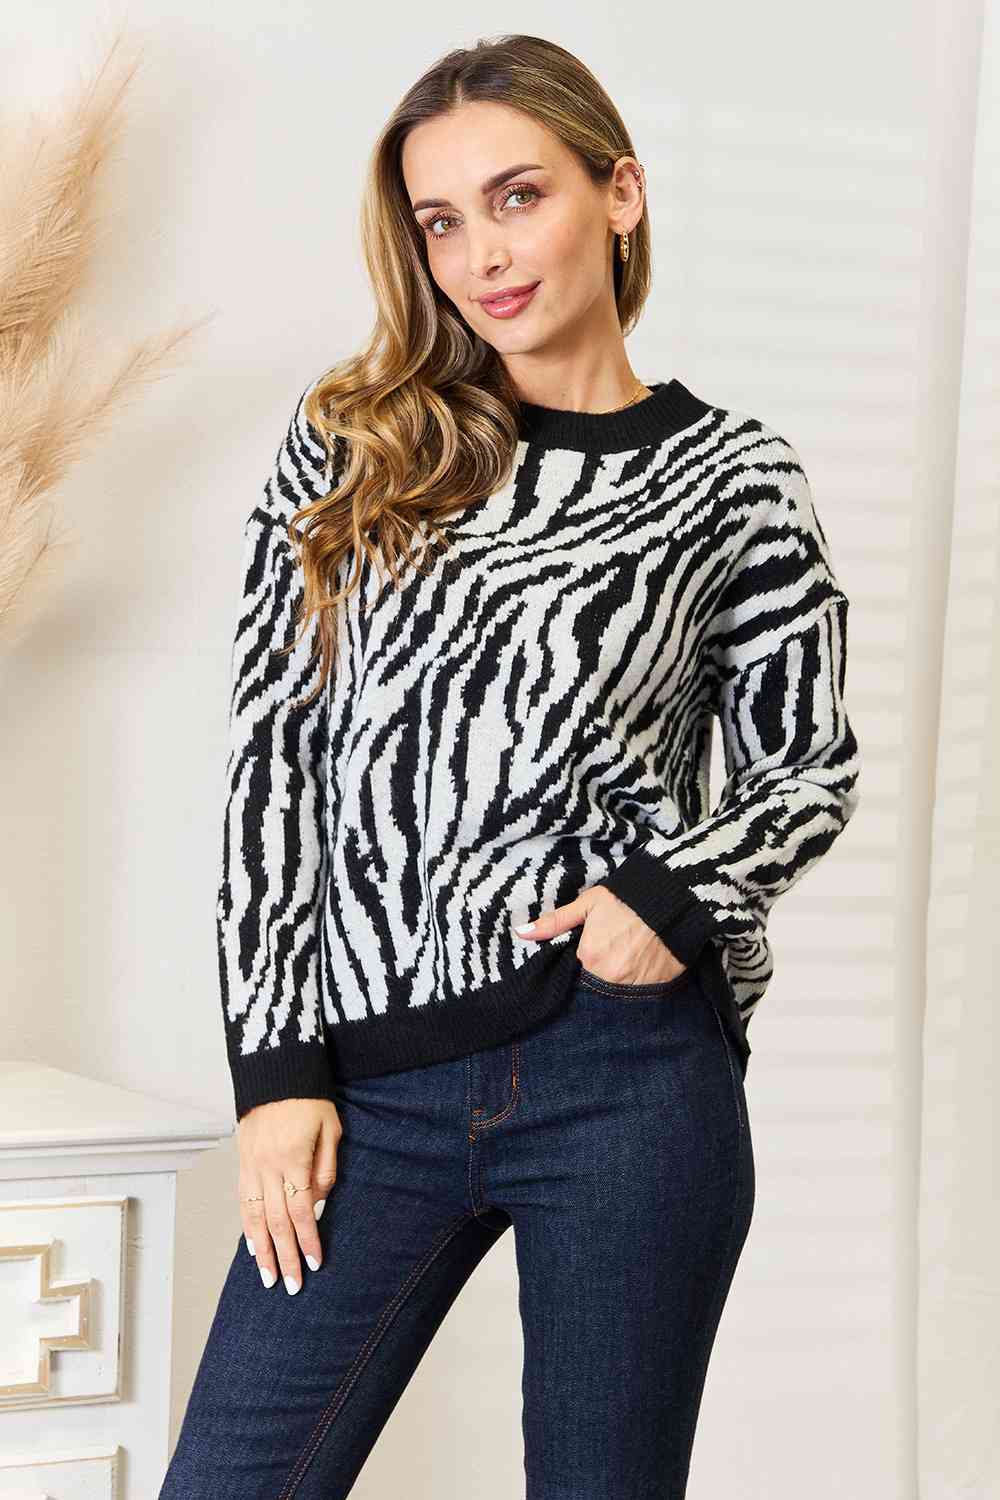 Heimsih Full Size Zebra Print Sweater